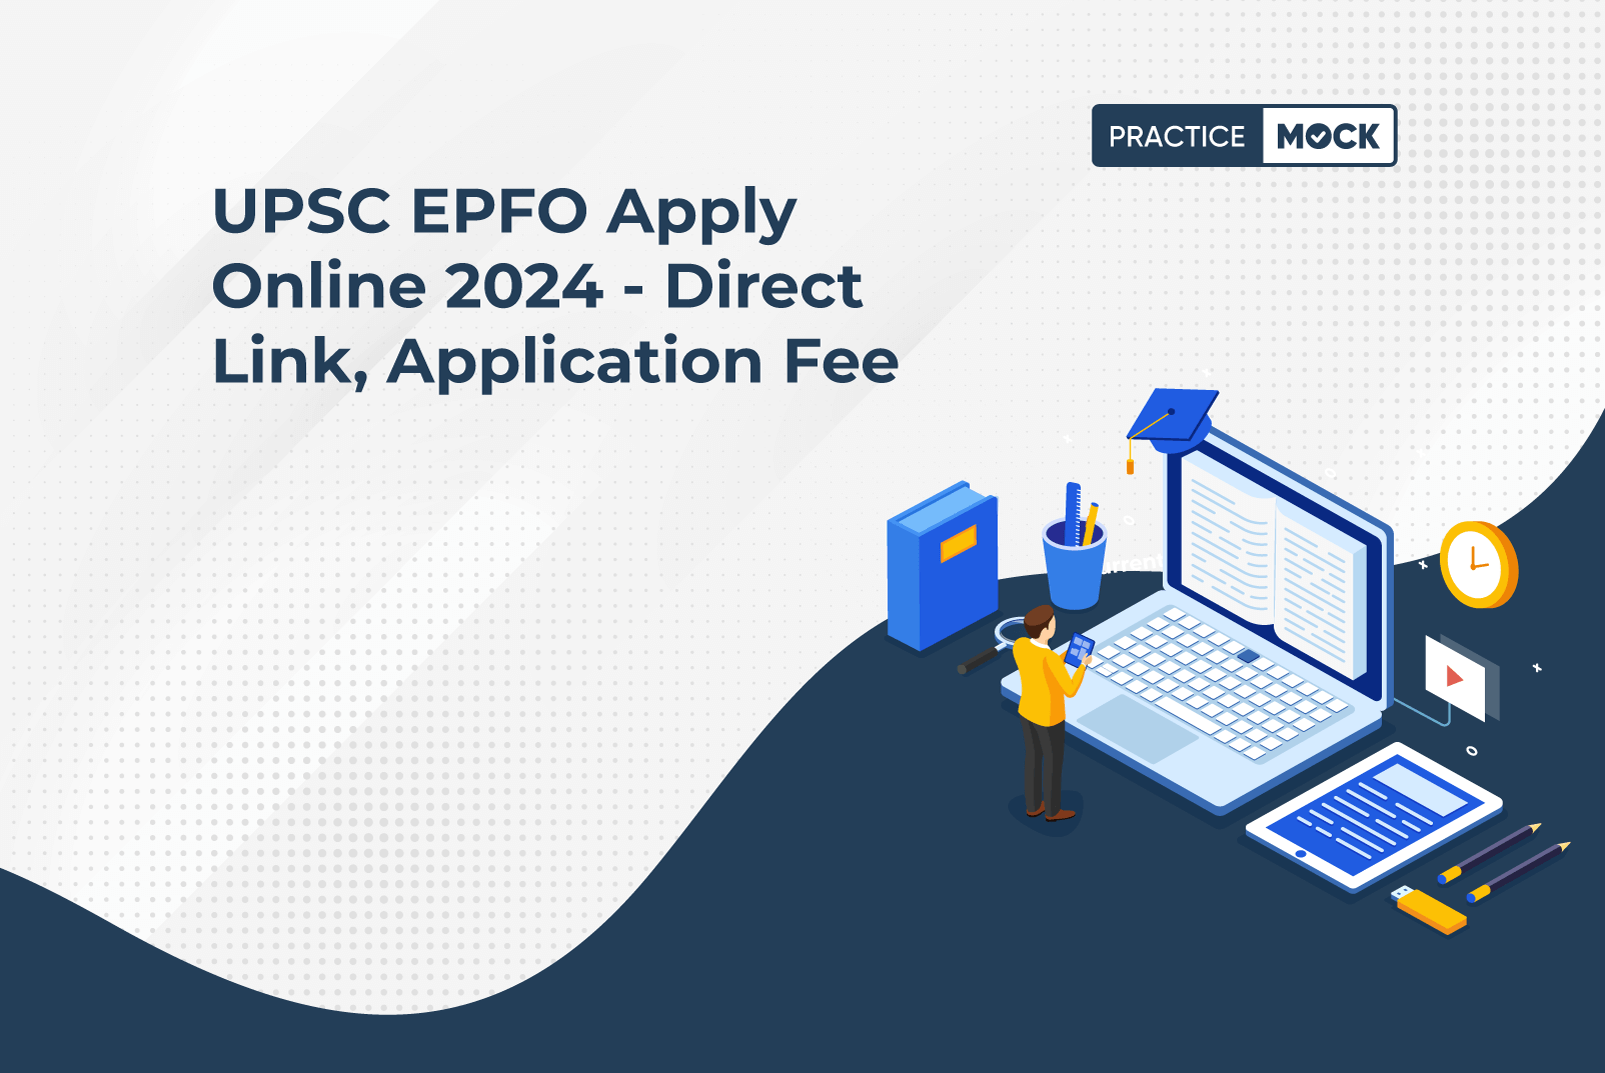 UPSC EPFO 2024 Apply Online